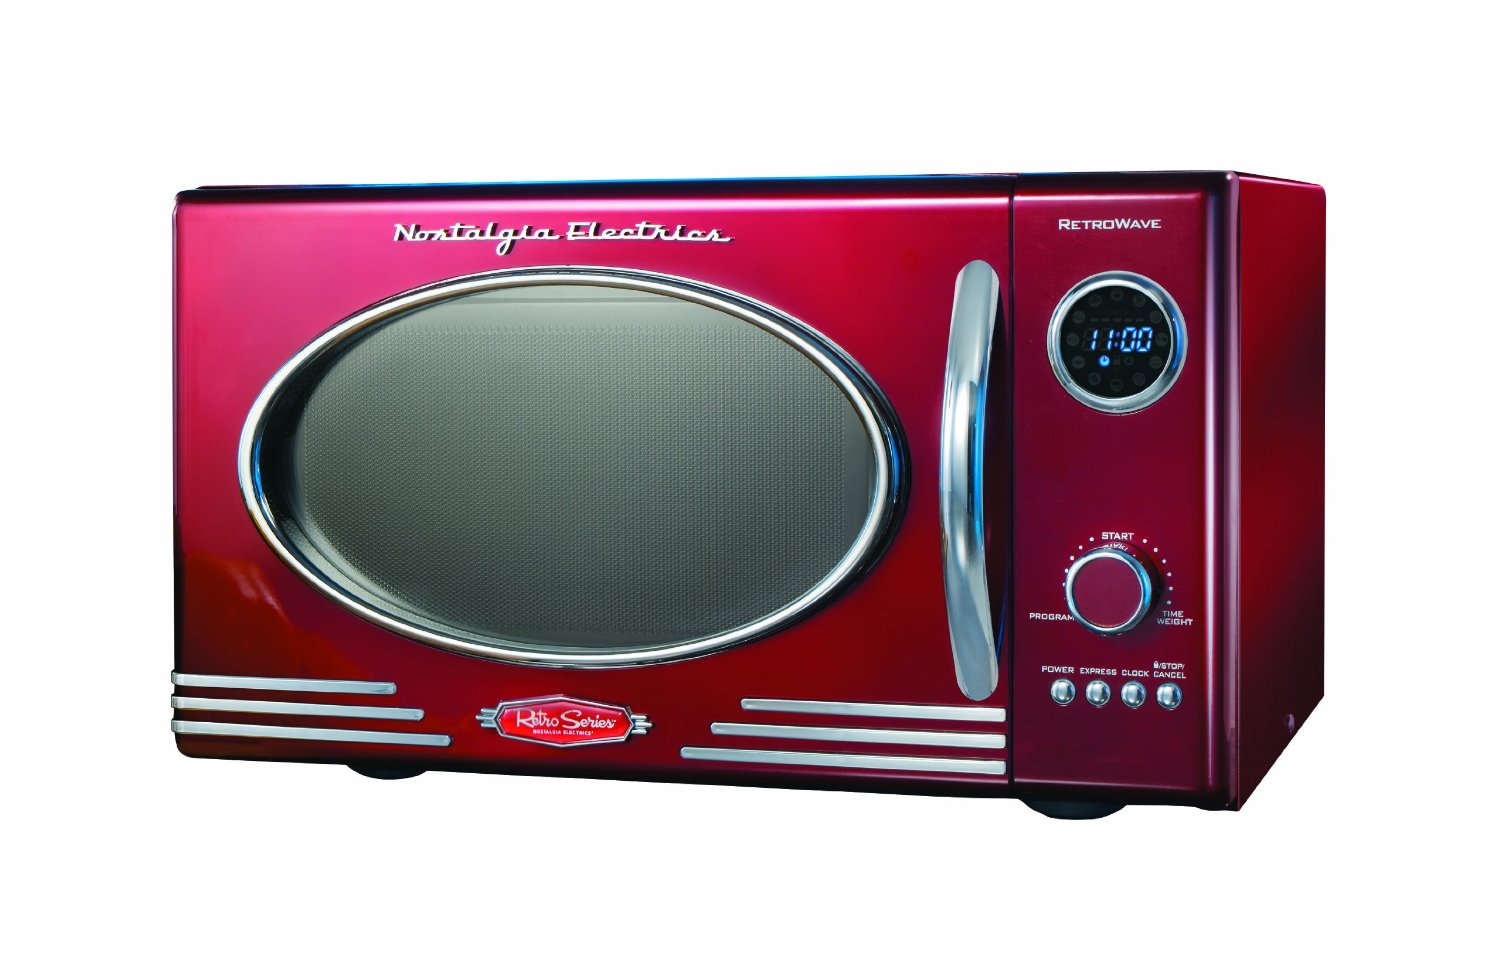 Nostalgia Electrics RMO400RED Retro Series .9 CF Microwave Oven, Red